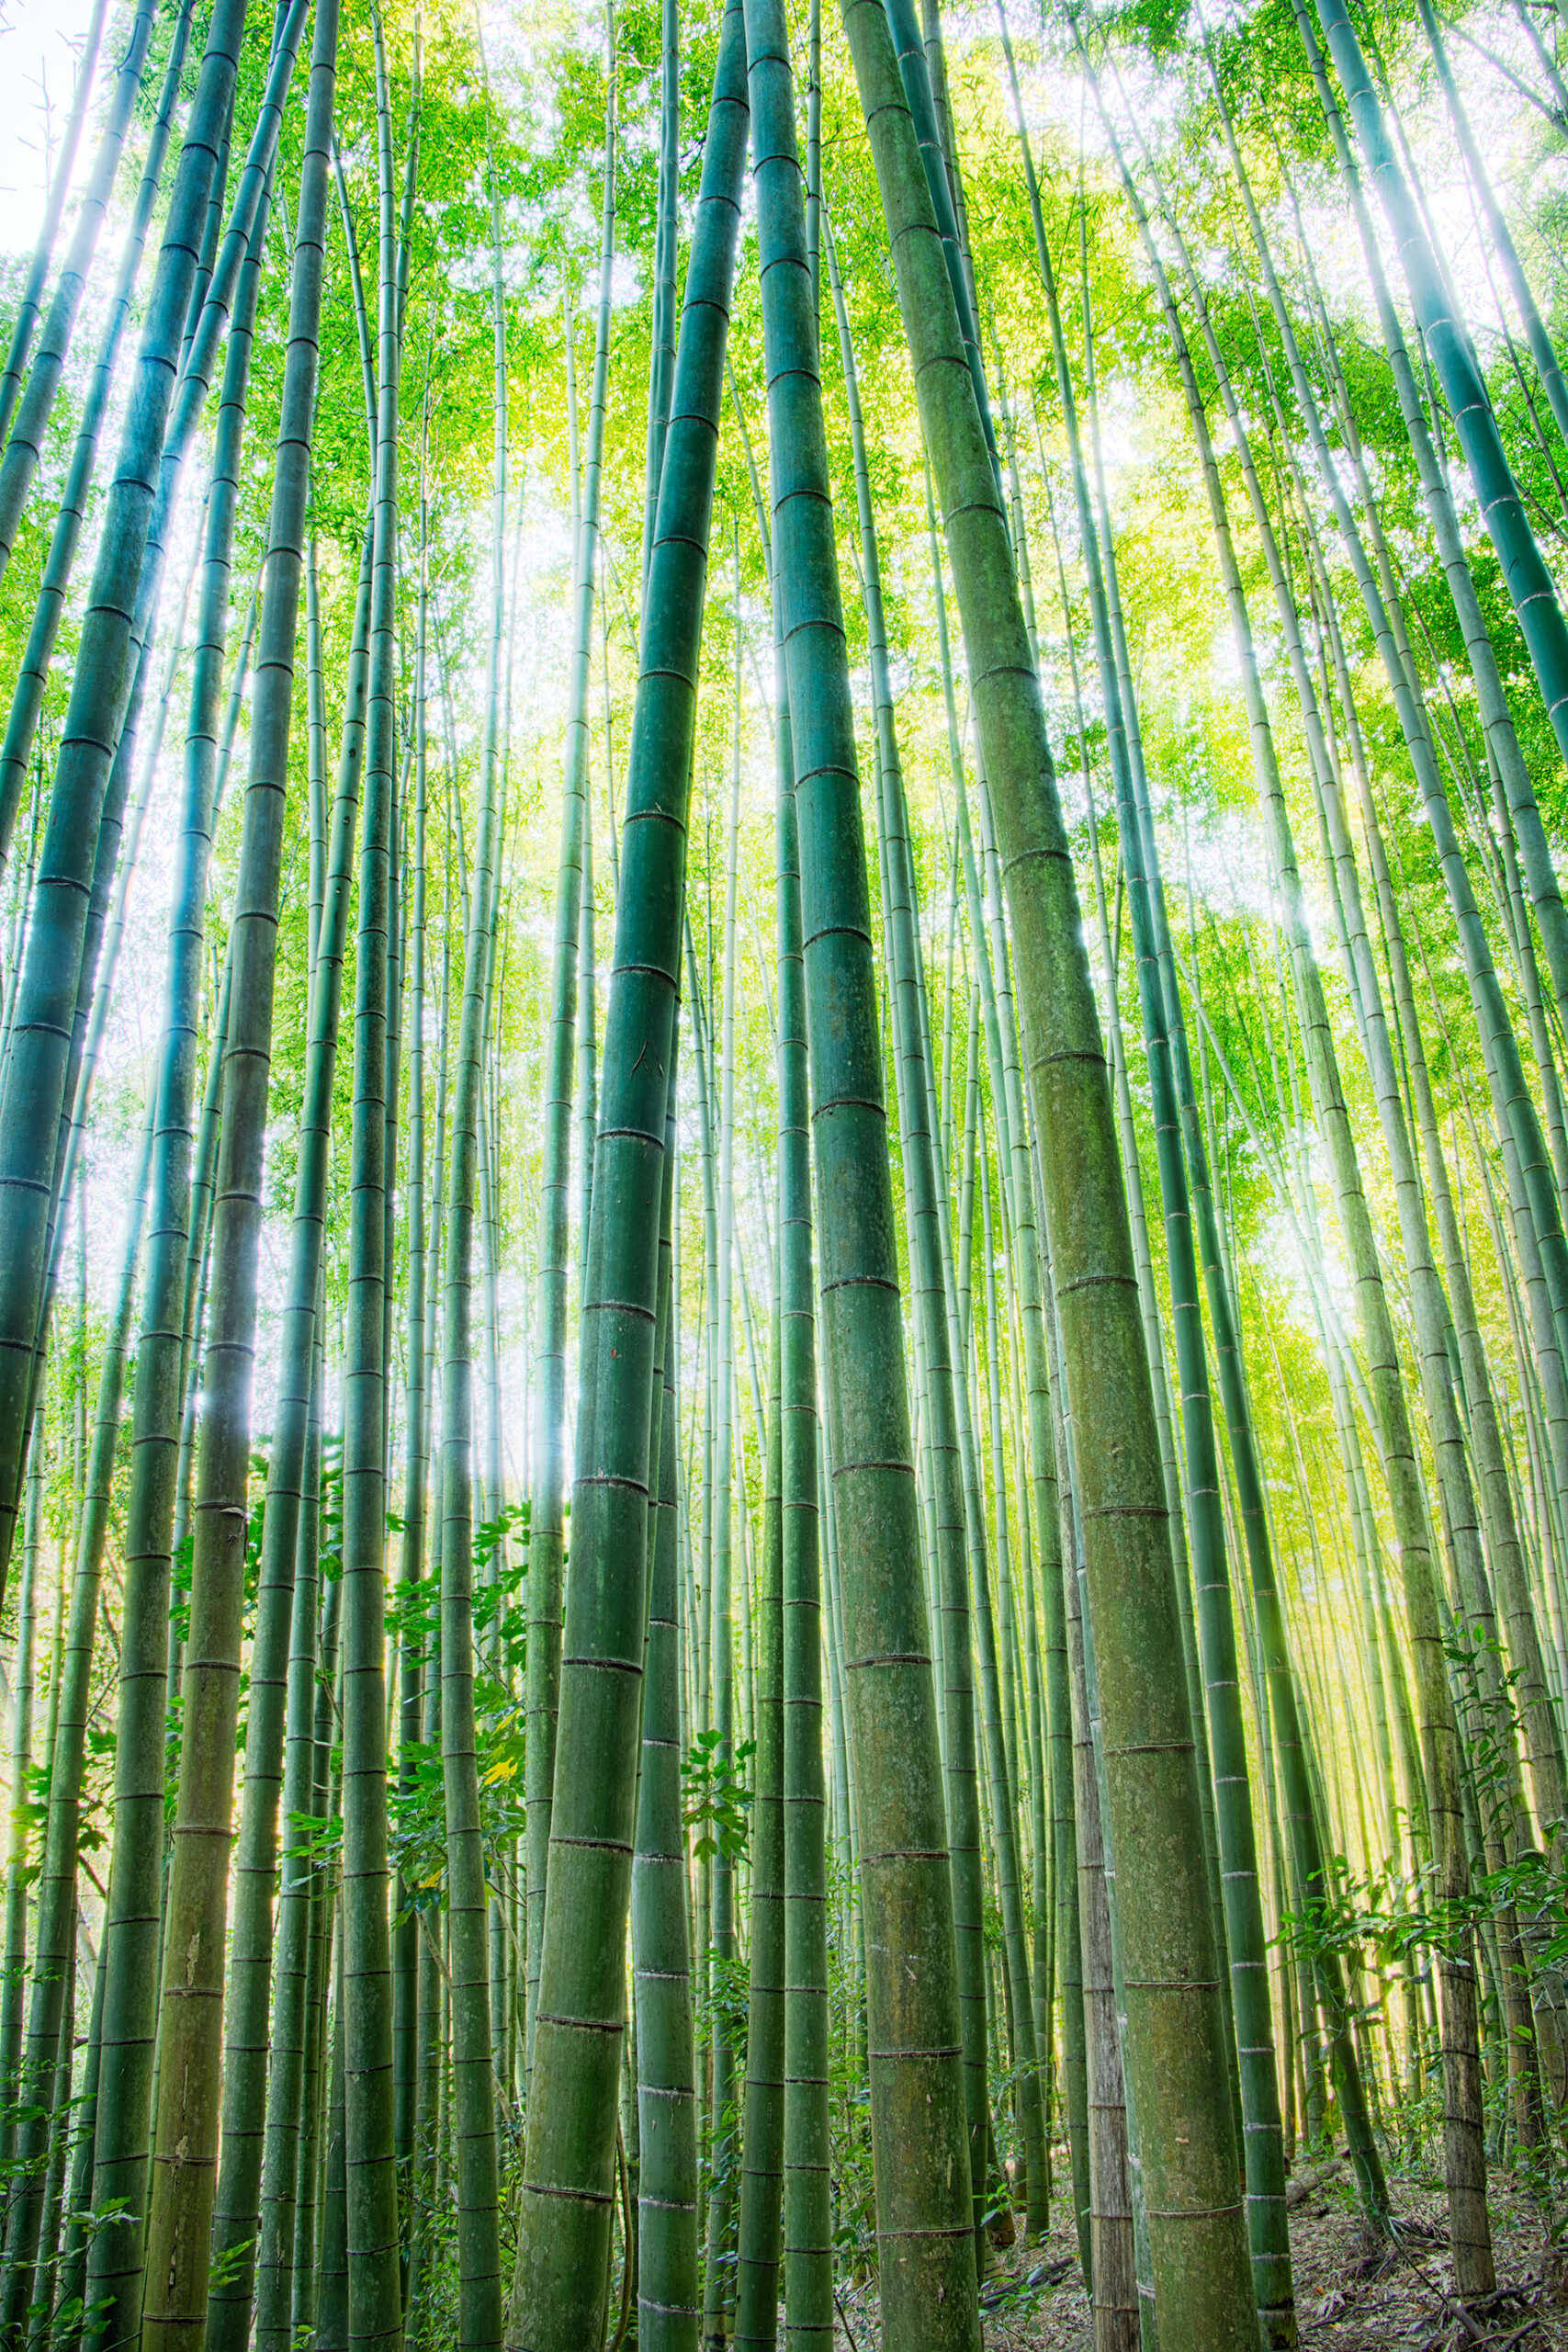 Bamboo Woods near Kyoto